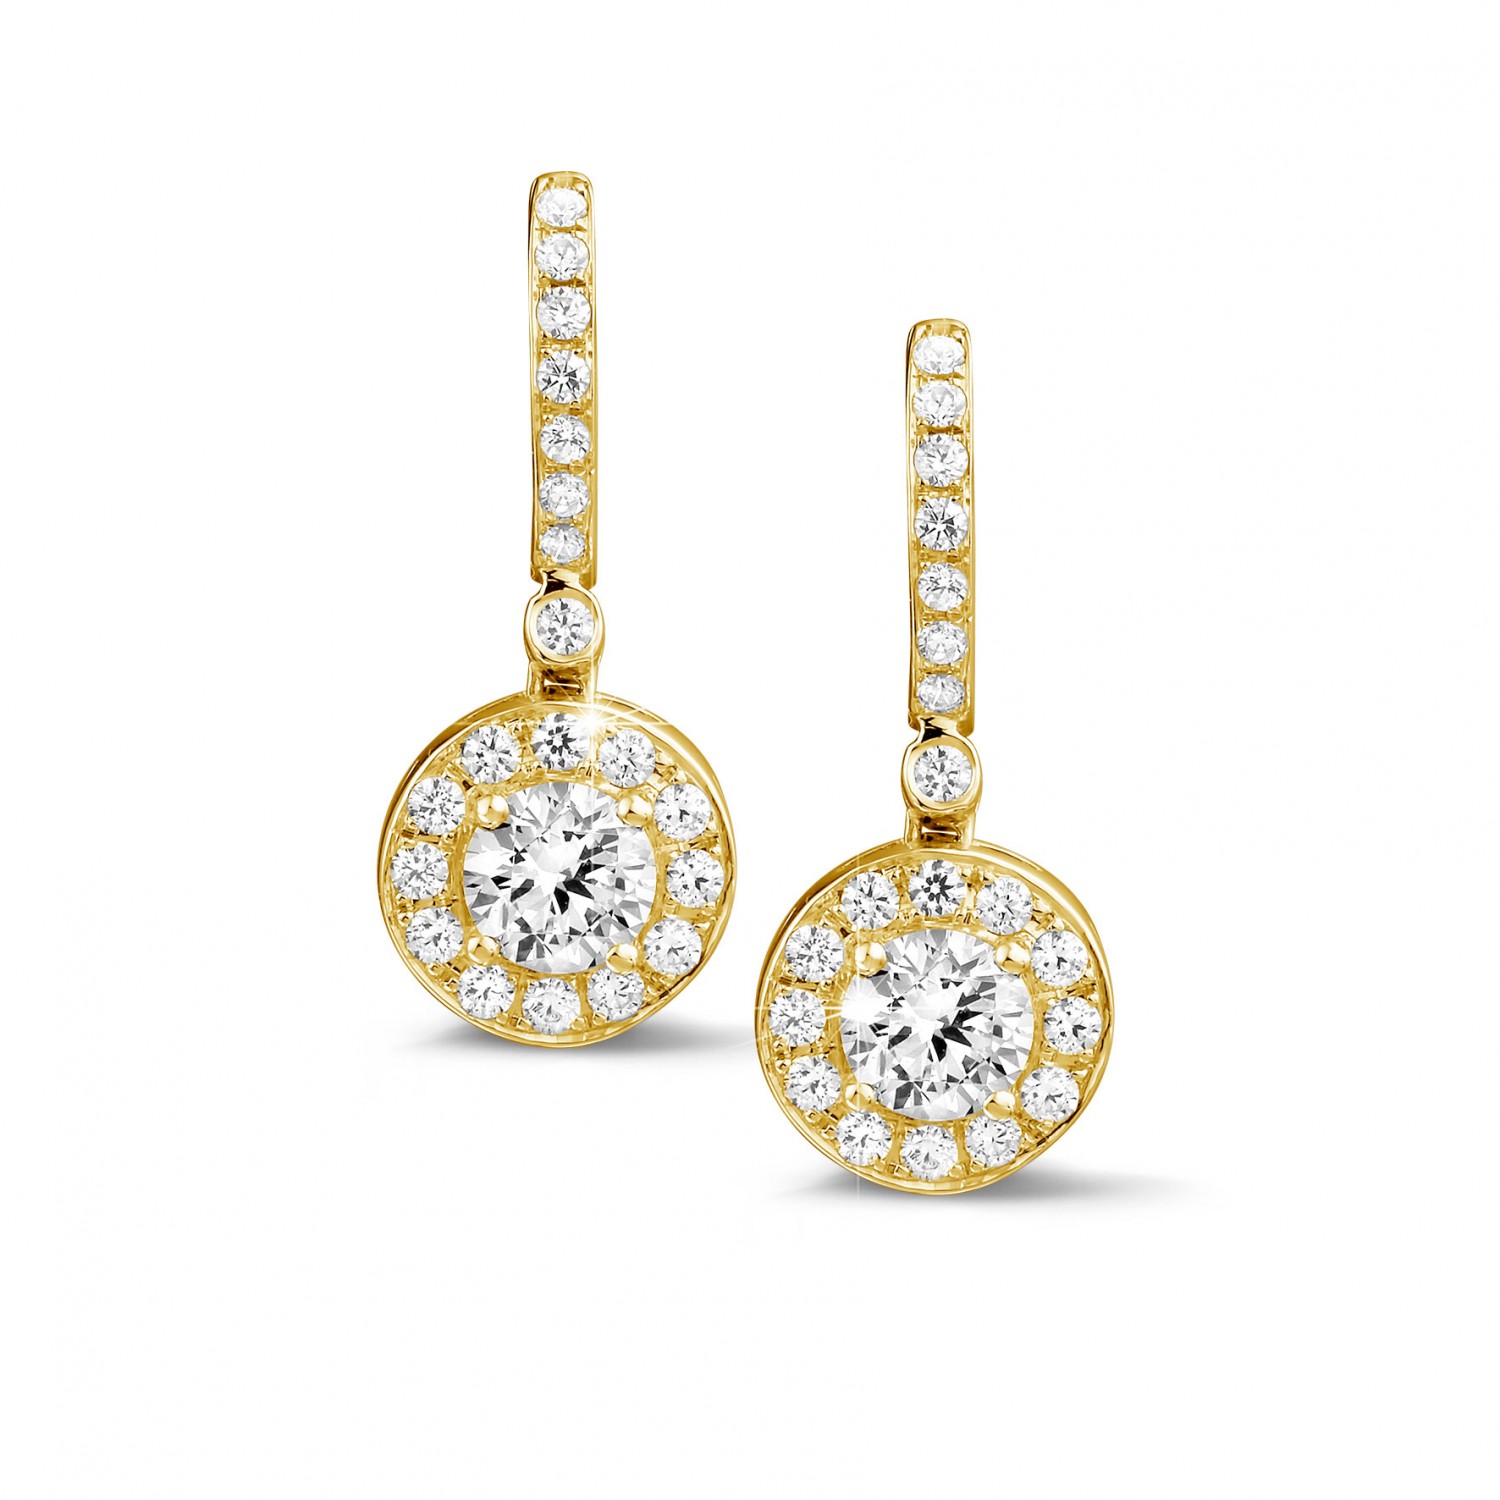 Halo earrings with 1.55 carat diamonds in yellow gold - BAUNAT